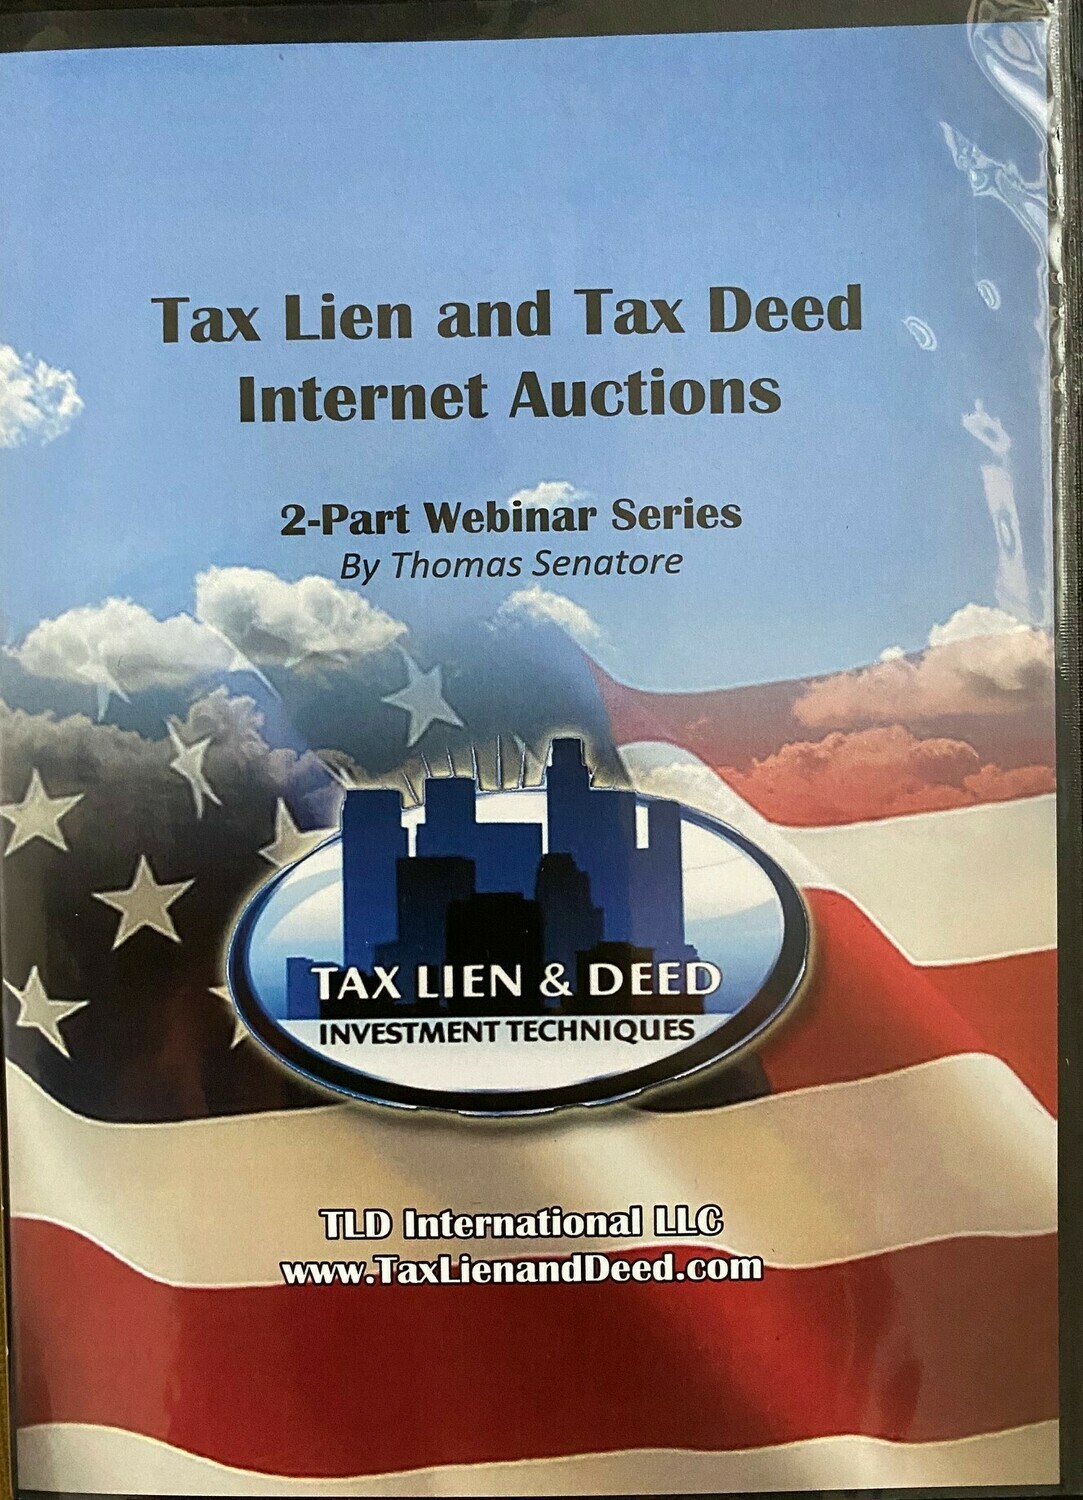 Tax lien and Tax Deed Internet Auctions a 2 Part Webinar Series